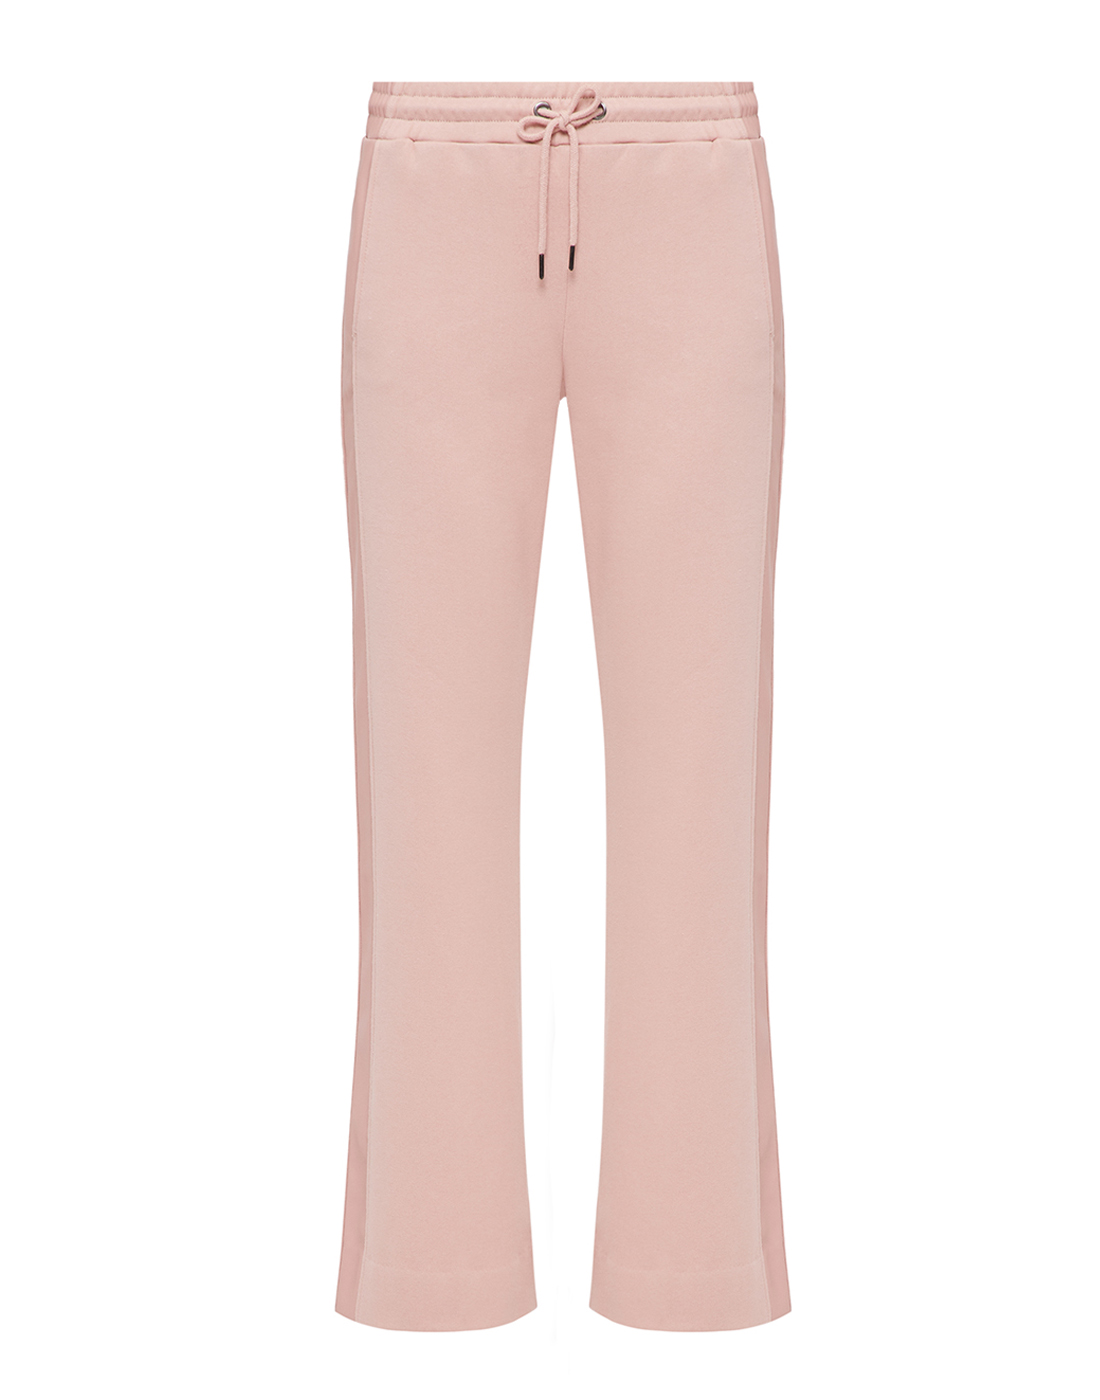 Женские розовые брюки Dorothee Schumacher S123205/438-1